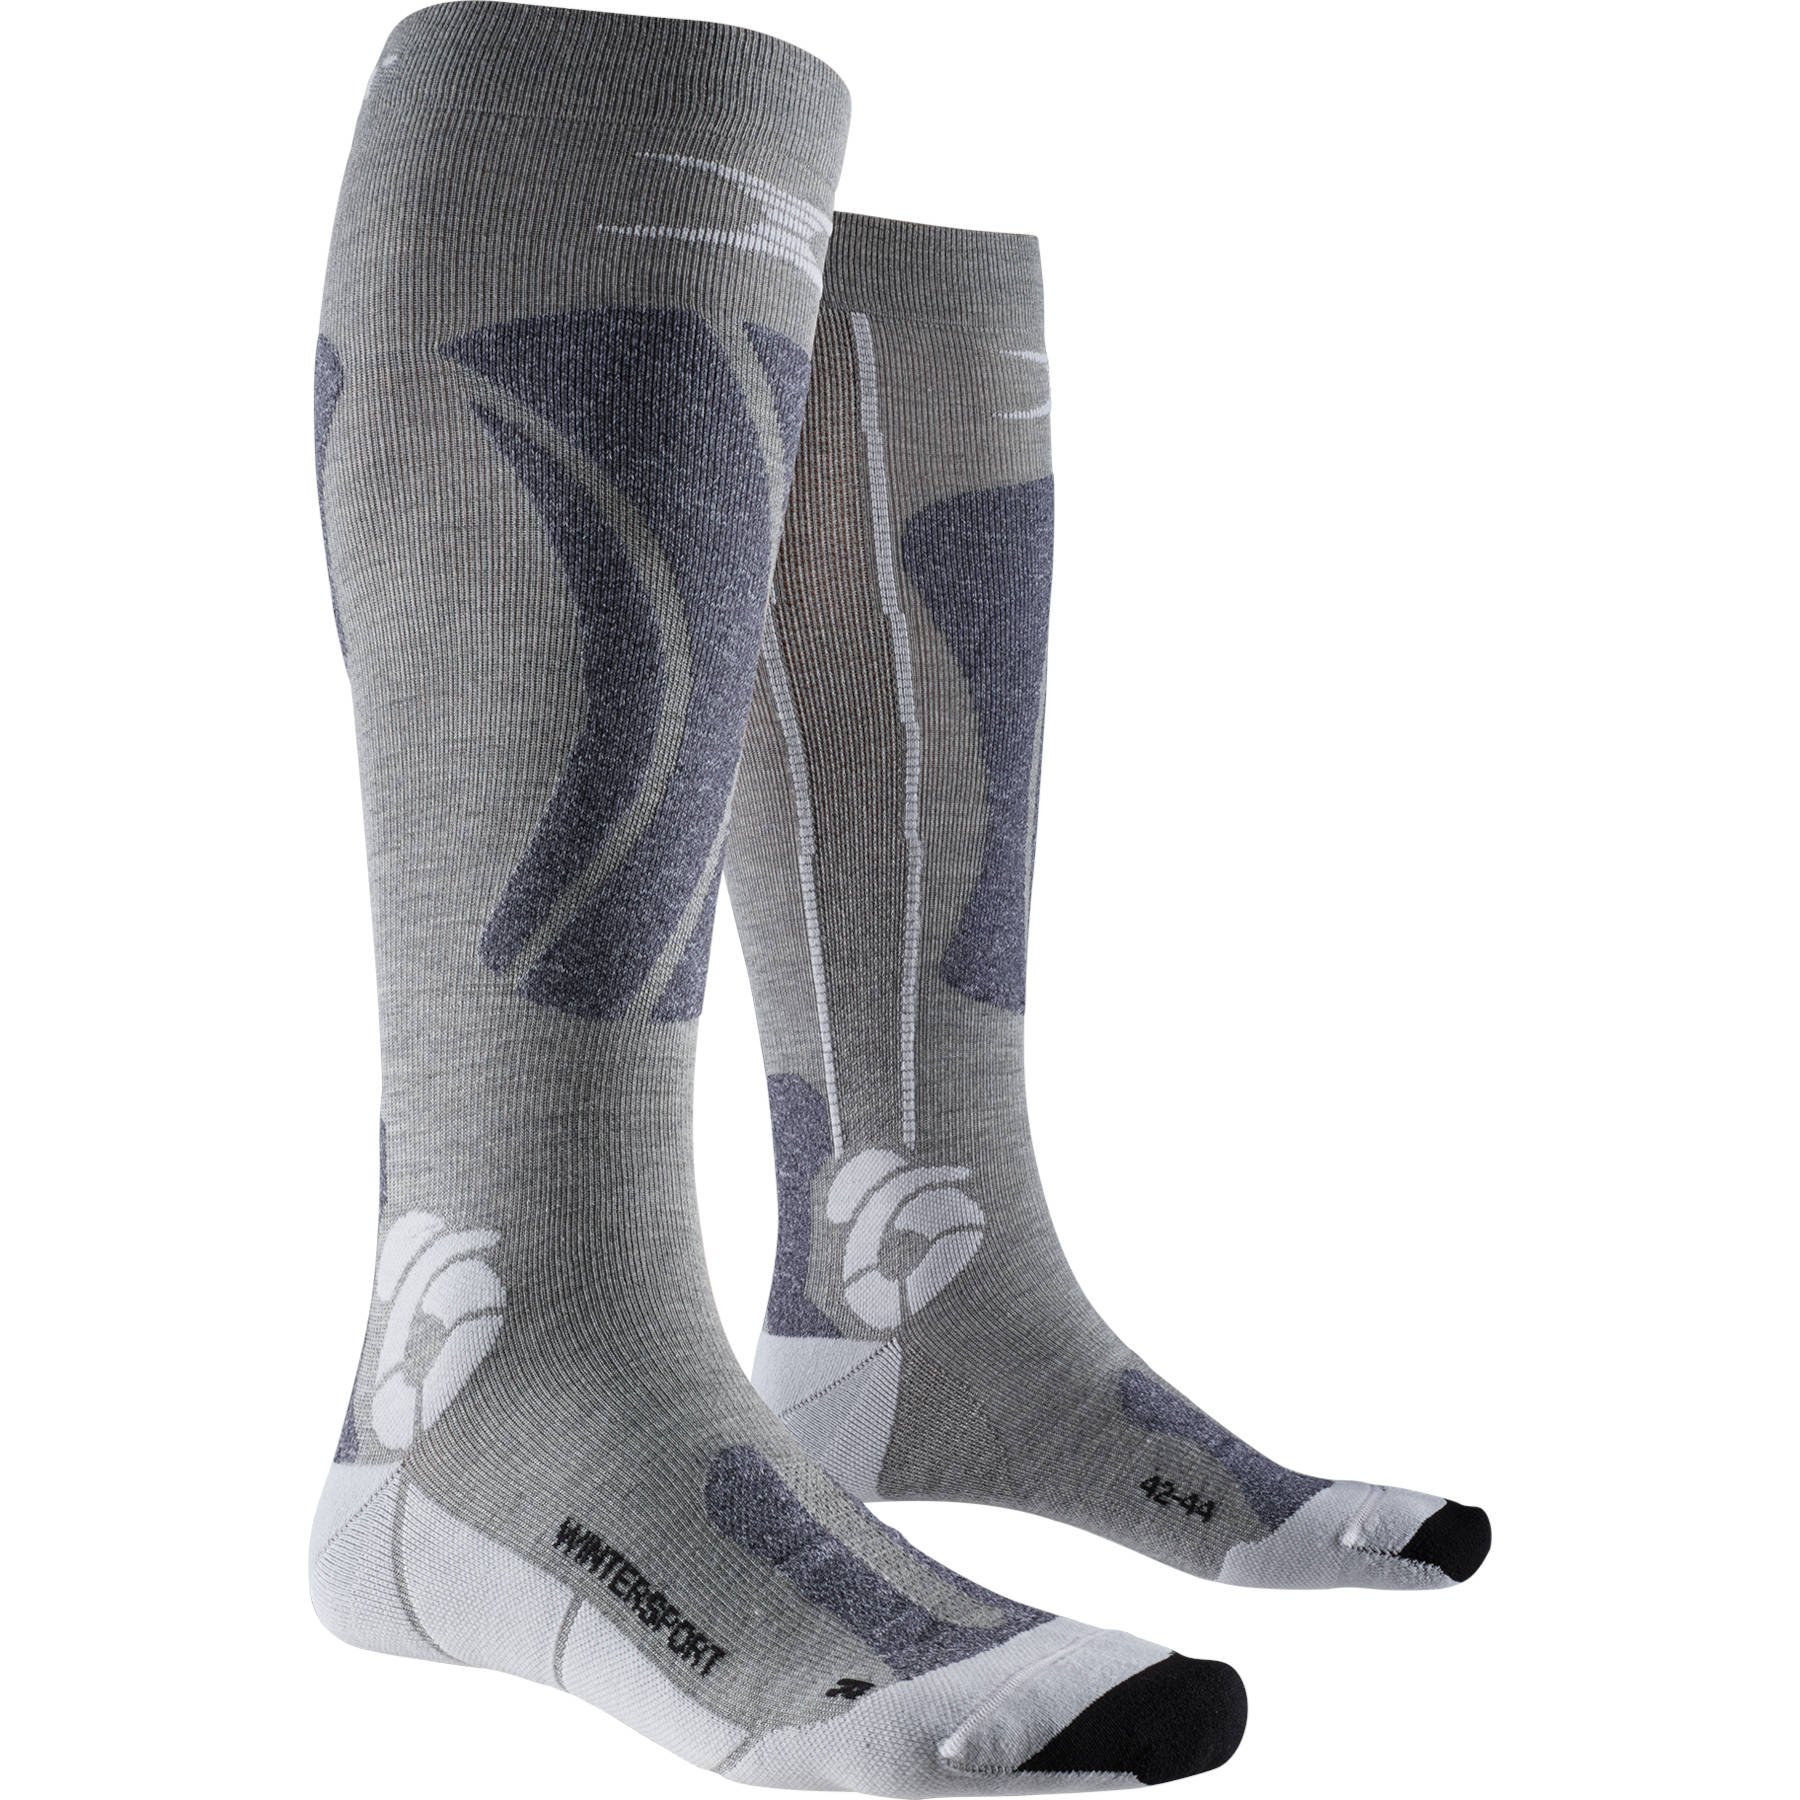 Picture of X-Socks Apani Wintersports Socks for Men - black/grey/white